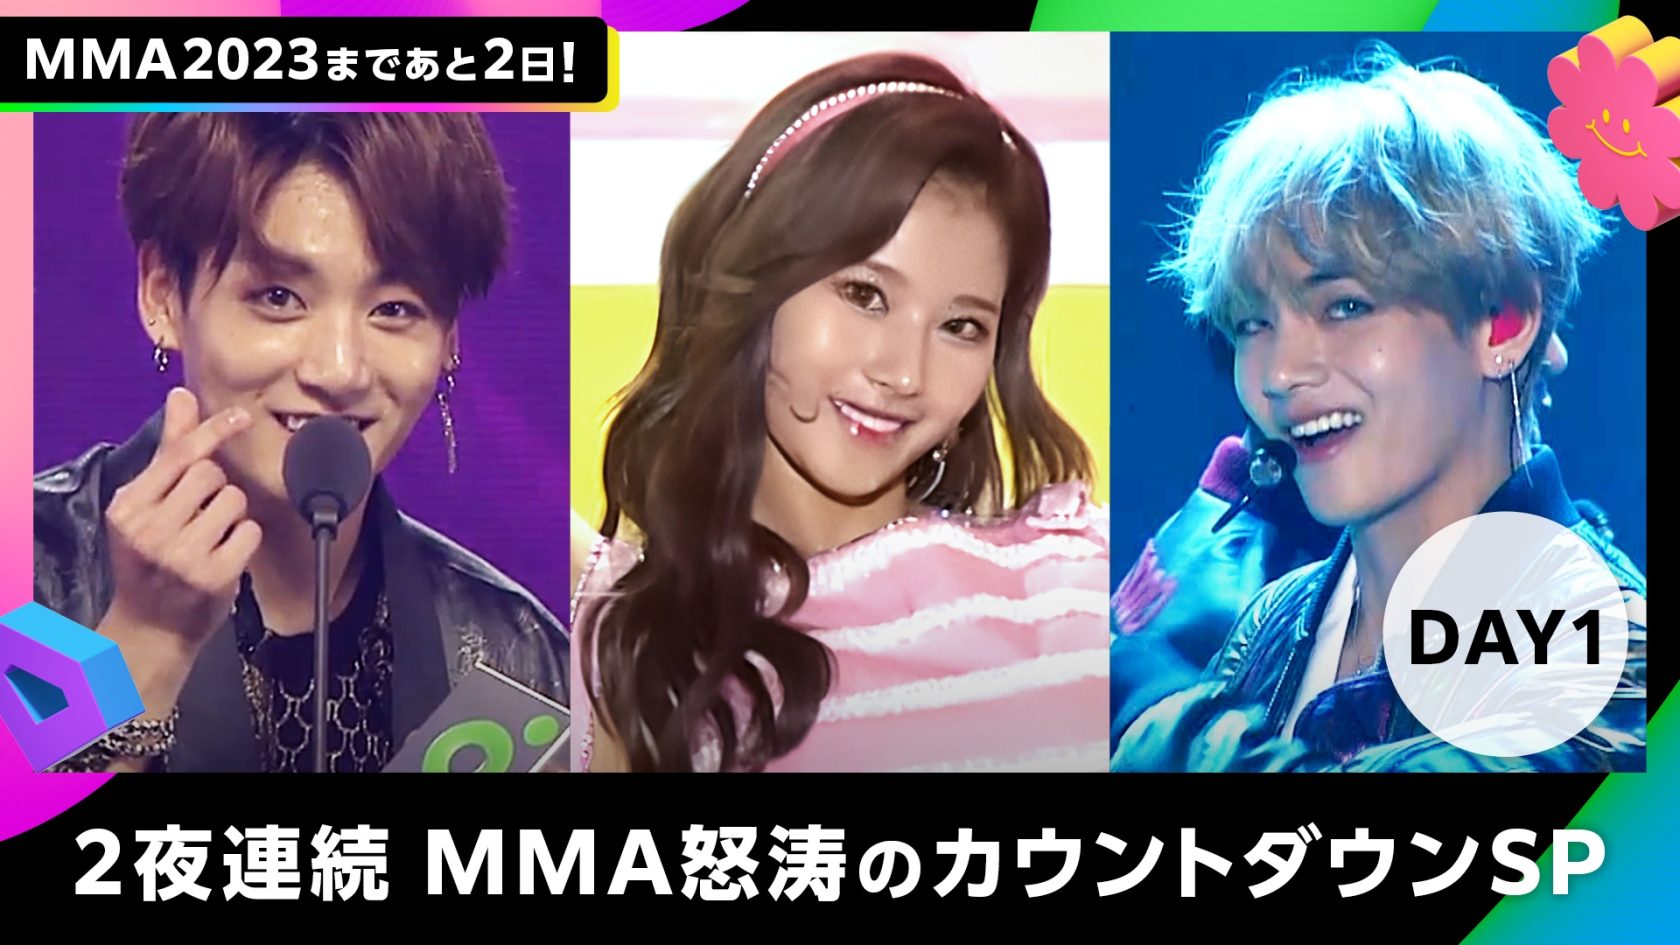 ABEMAにて国内独占・全編無料生中継される「MMA2023」©2023 Melon Music Awards (MMA2023)